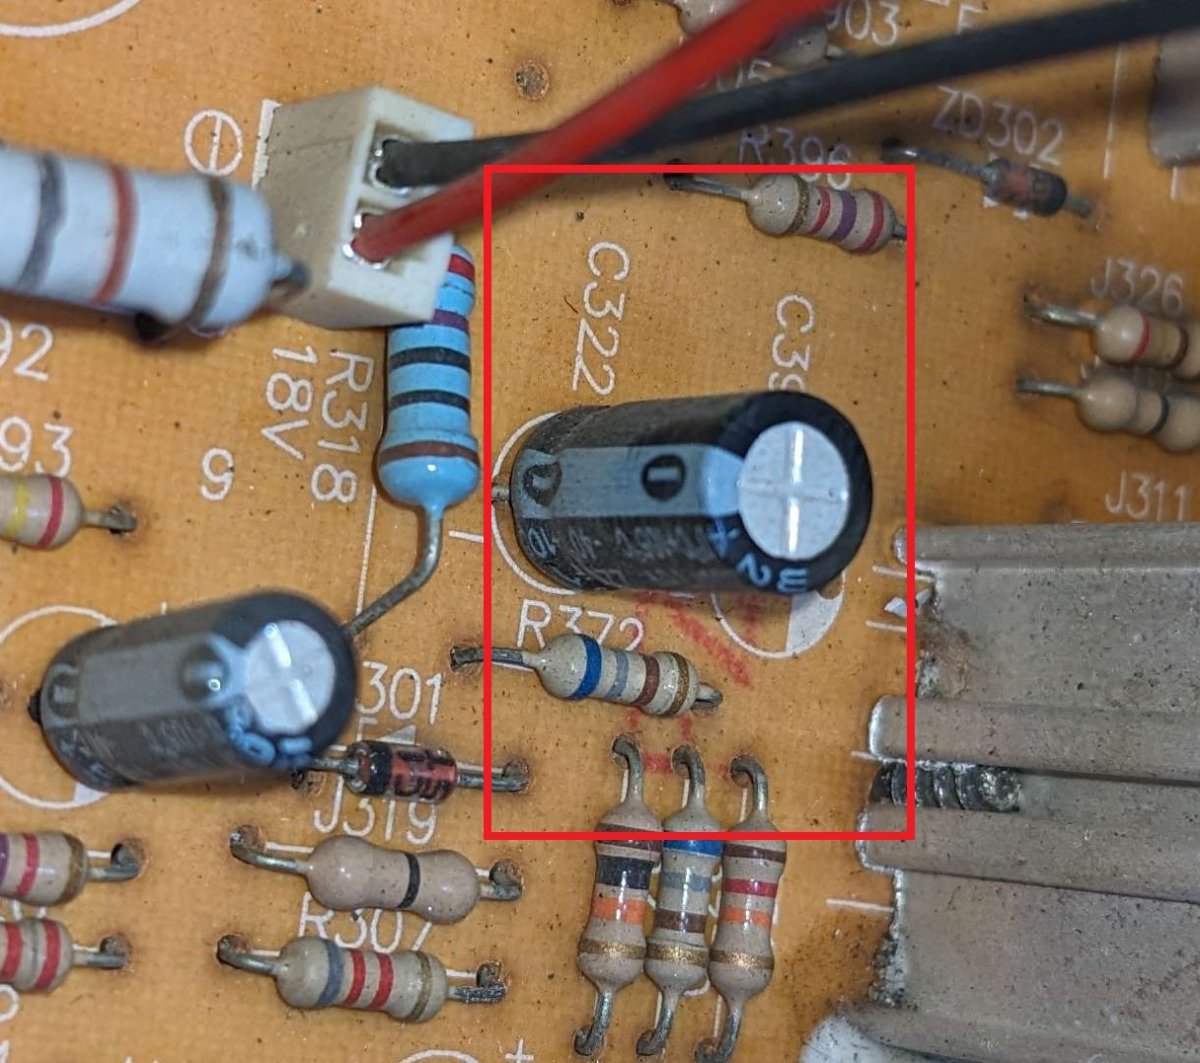 topside capacitor cropped.jpg